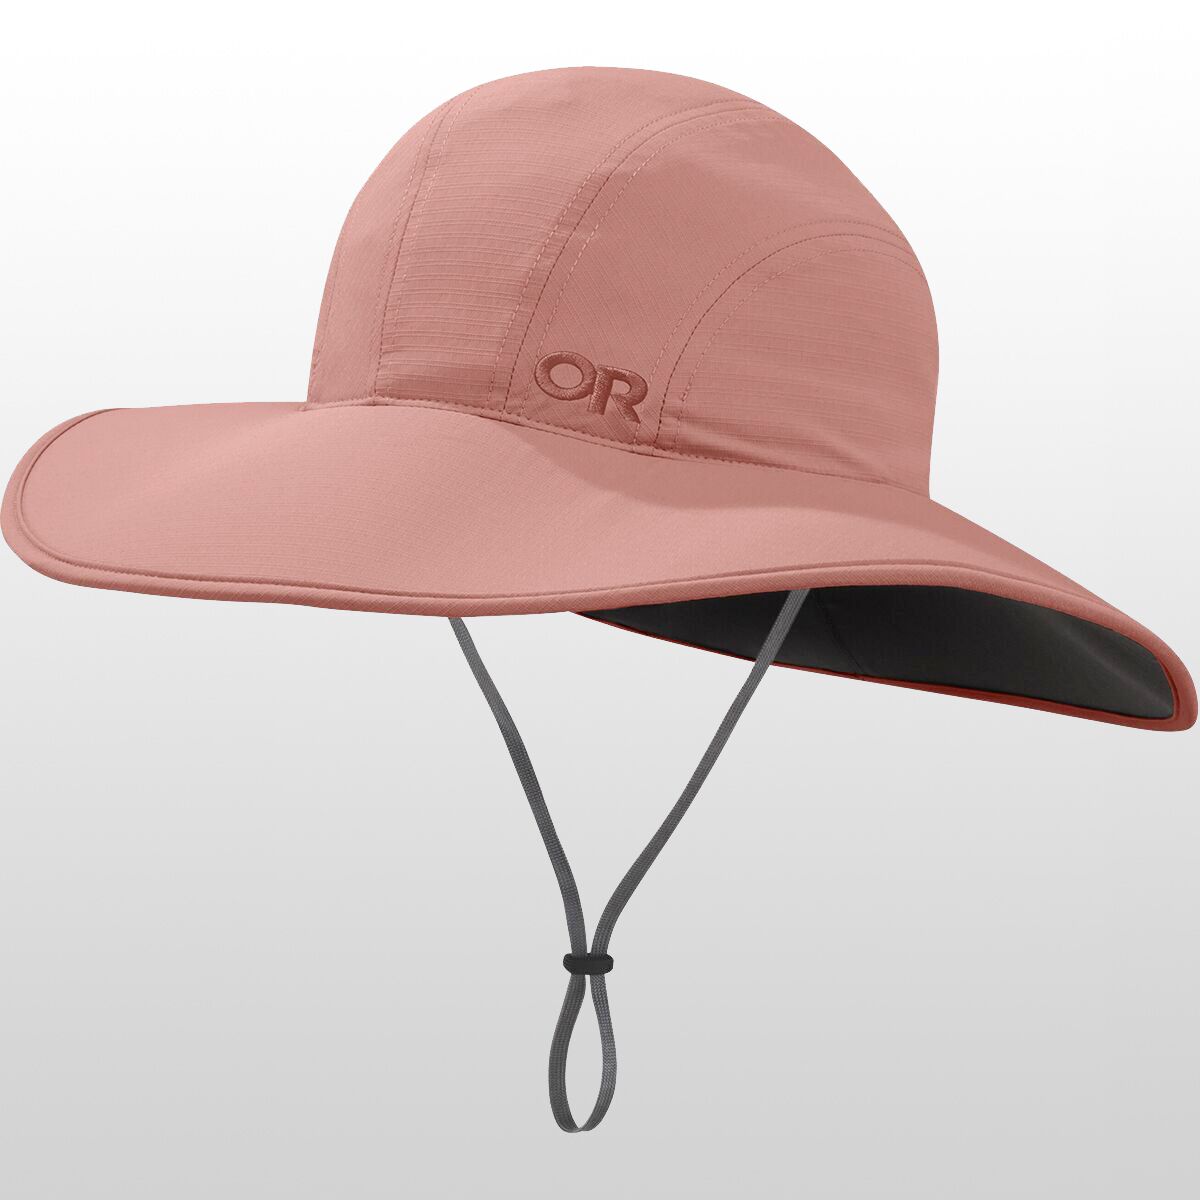 Outdoor Research Oasis Sun Hat - Women's - Accessories